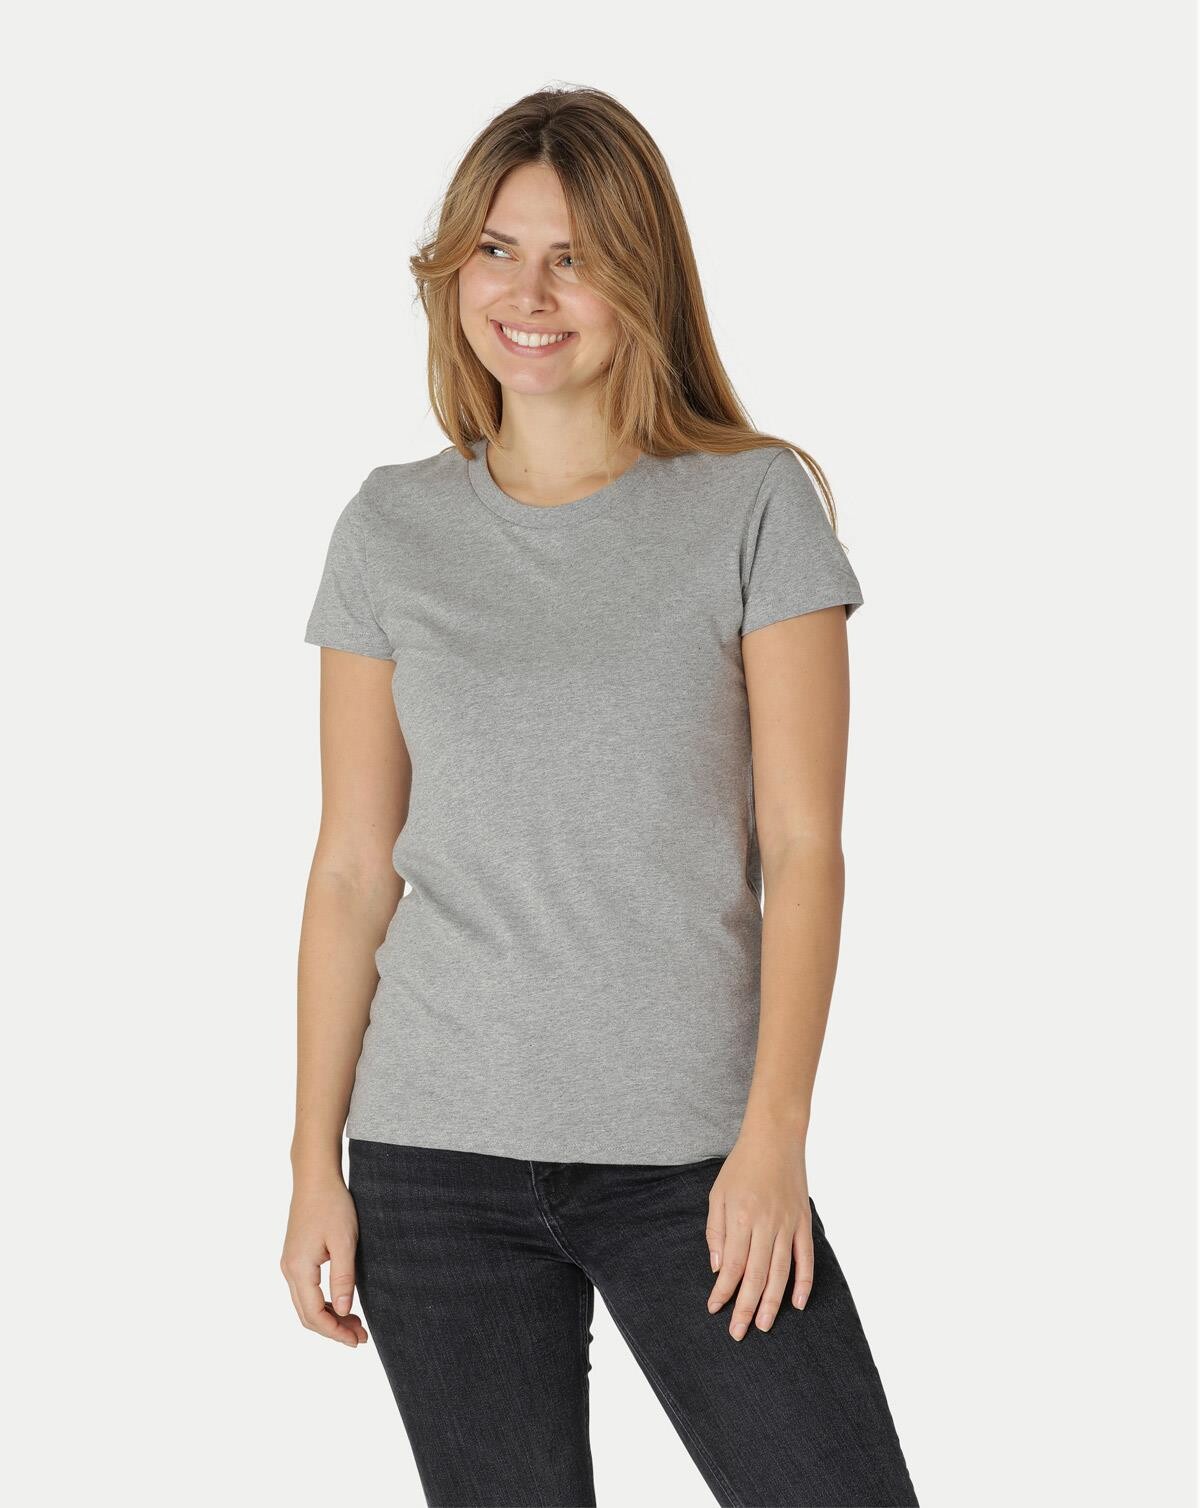 Neutral Økologisk Dame Tætsiddende T-Shirt (Grå Meleret, 2XL)